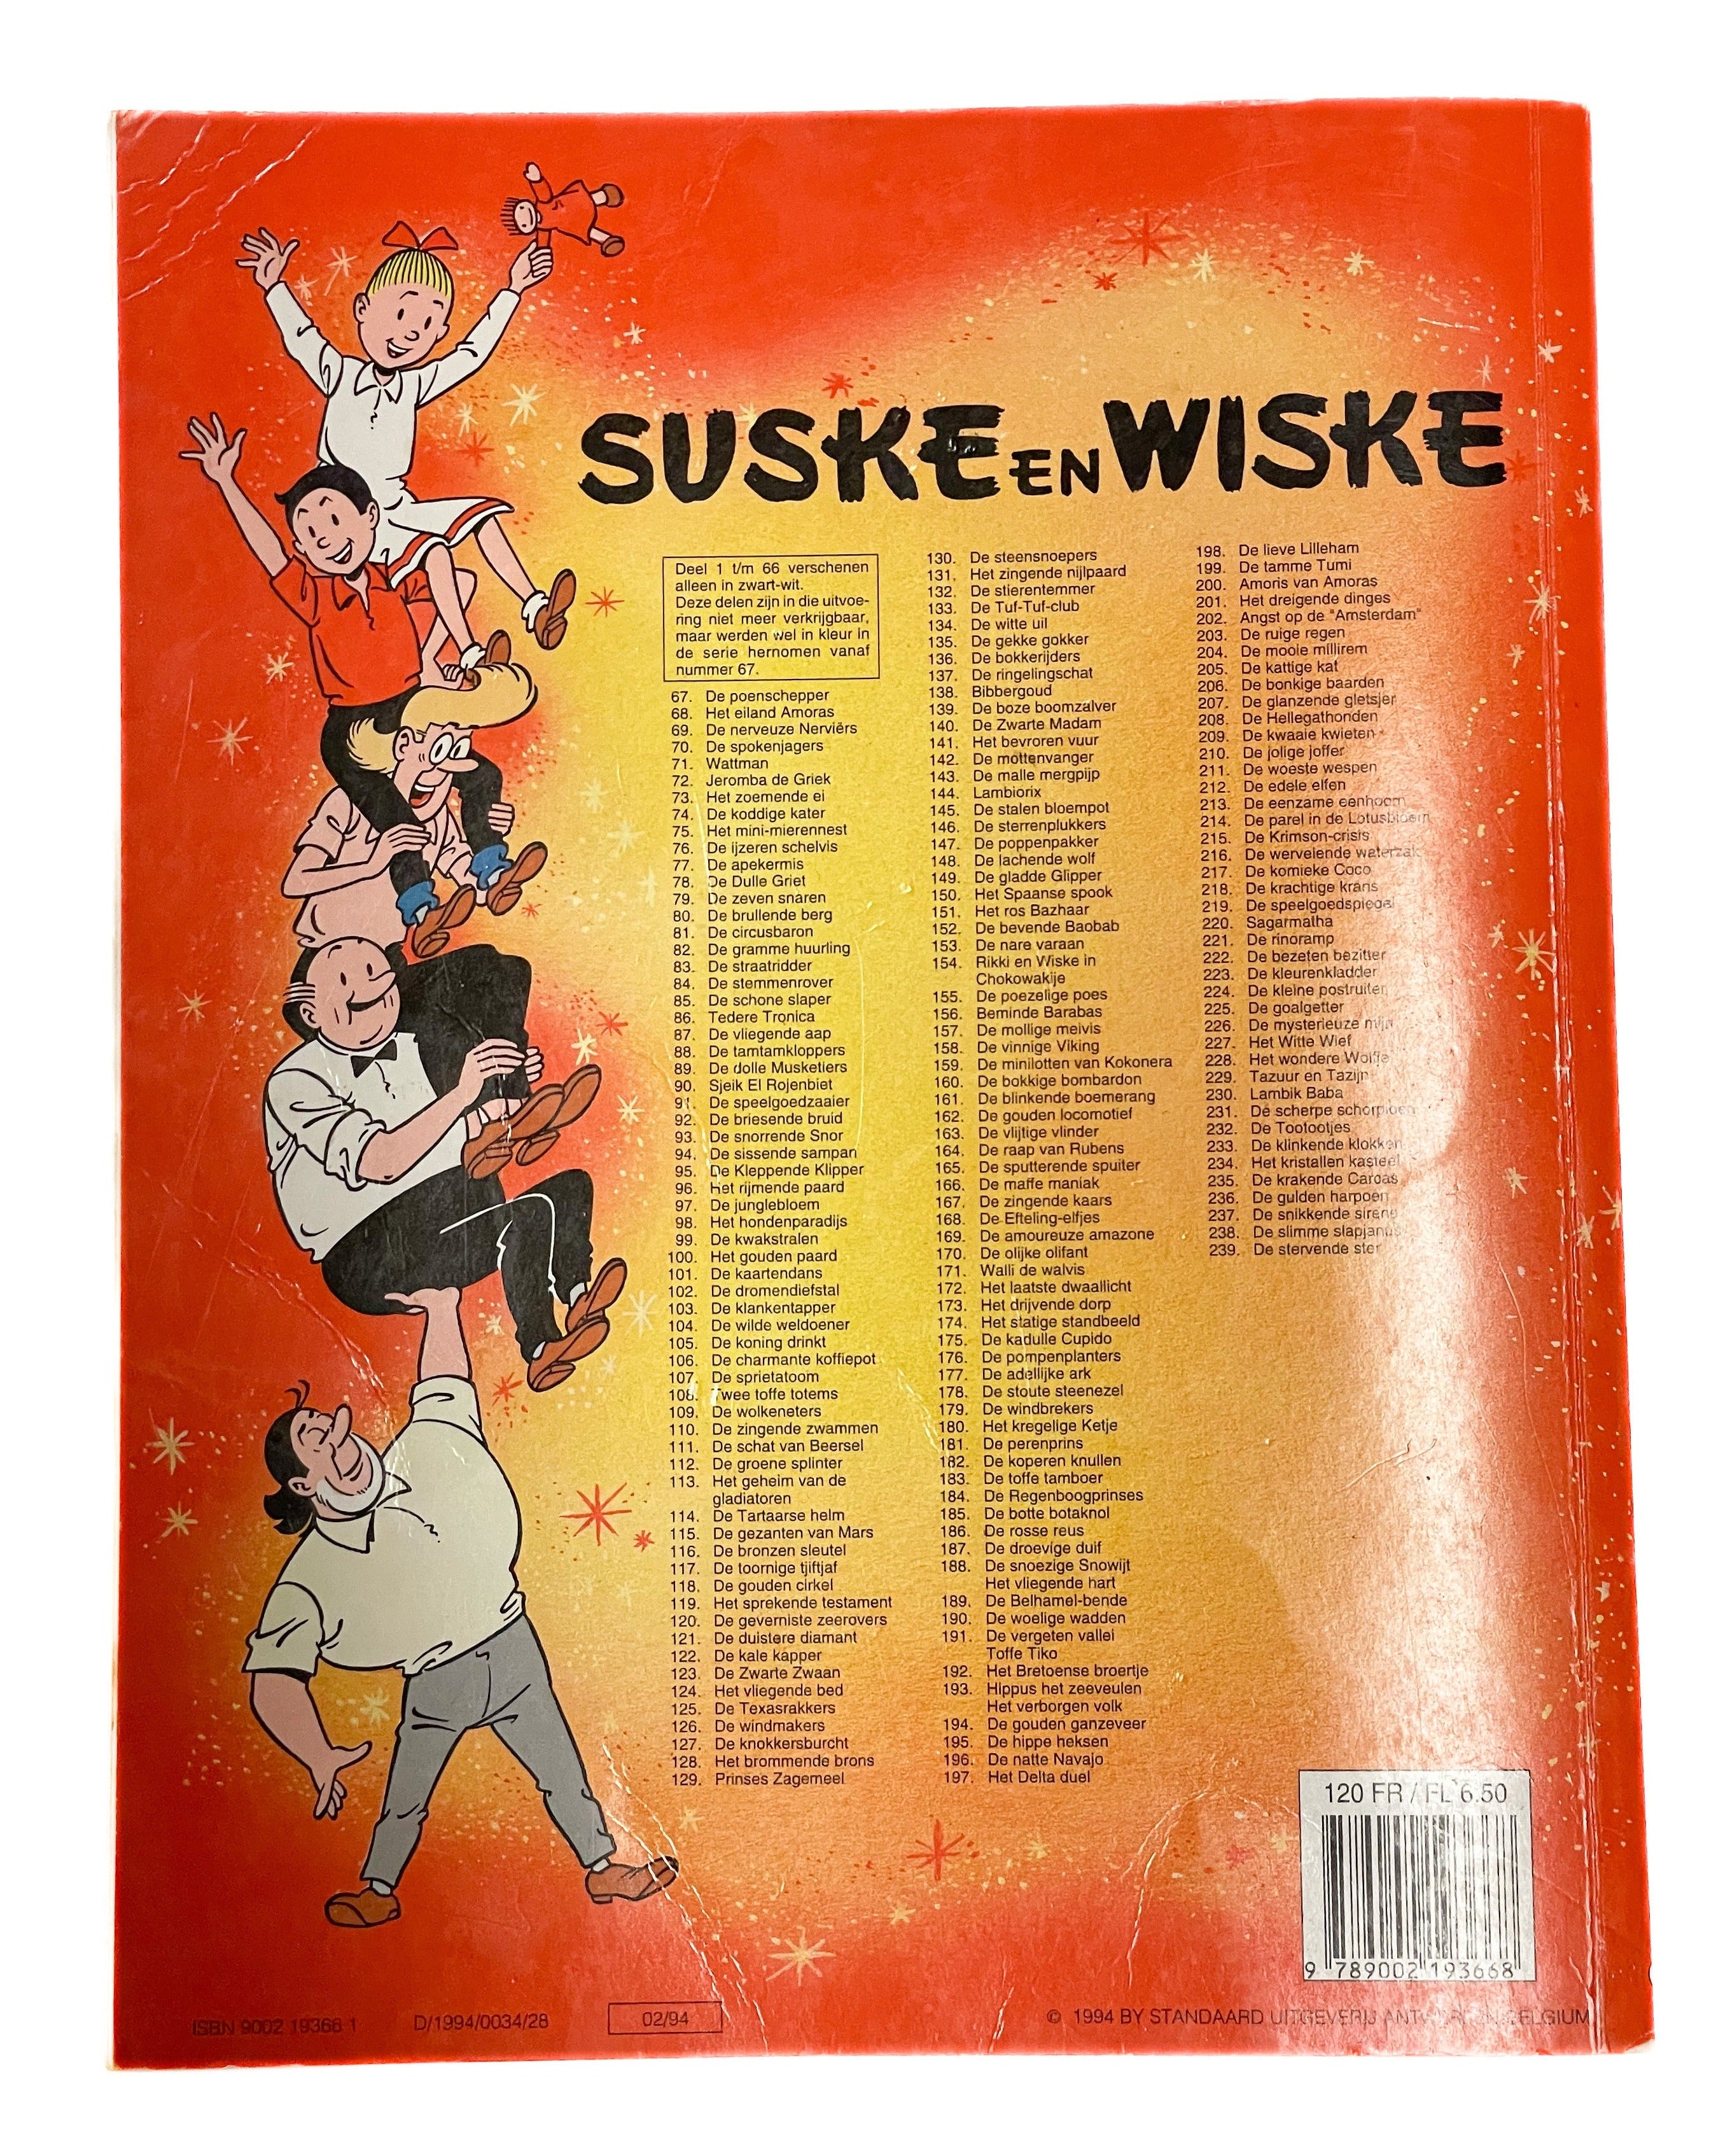 Suske en Wiske- De strevende ster nummer 239 02/94